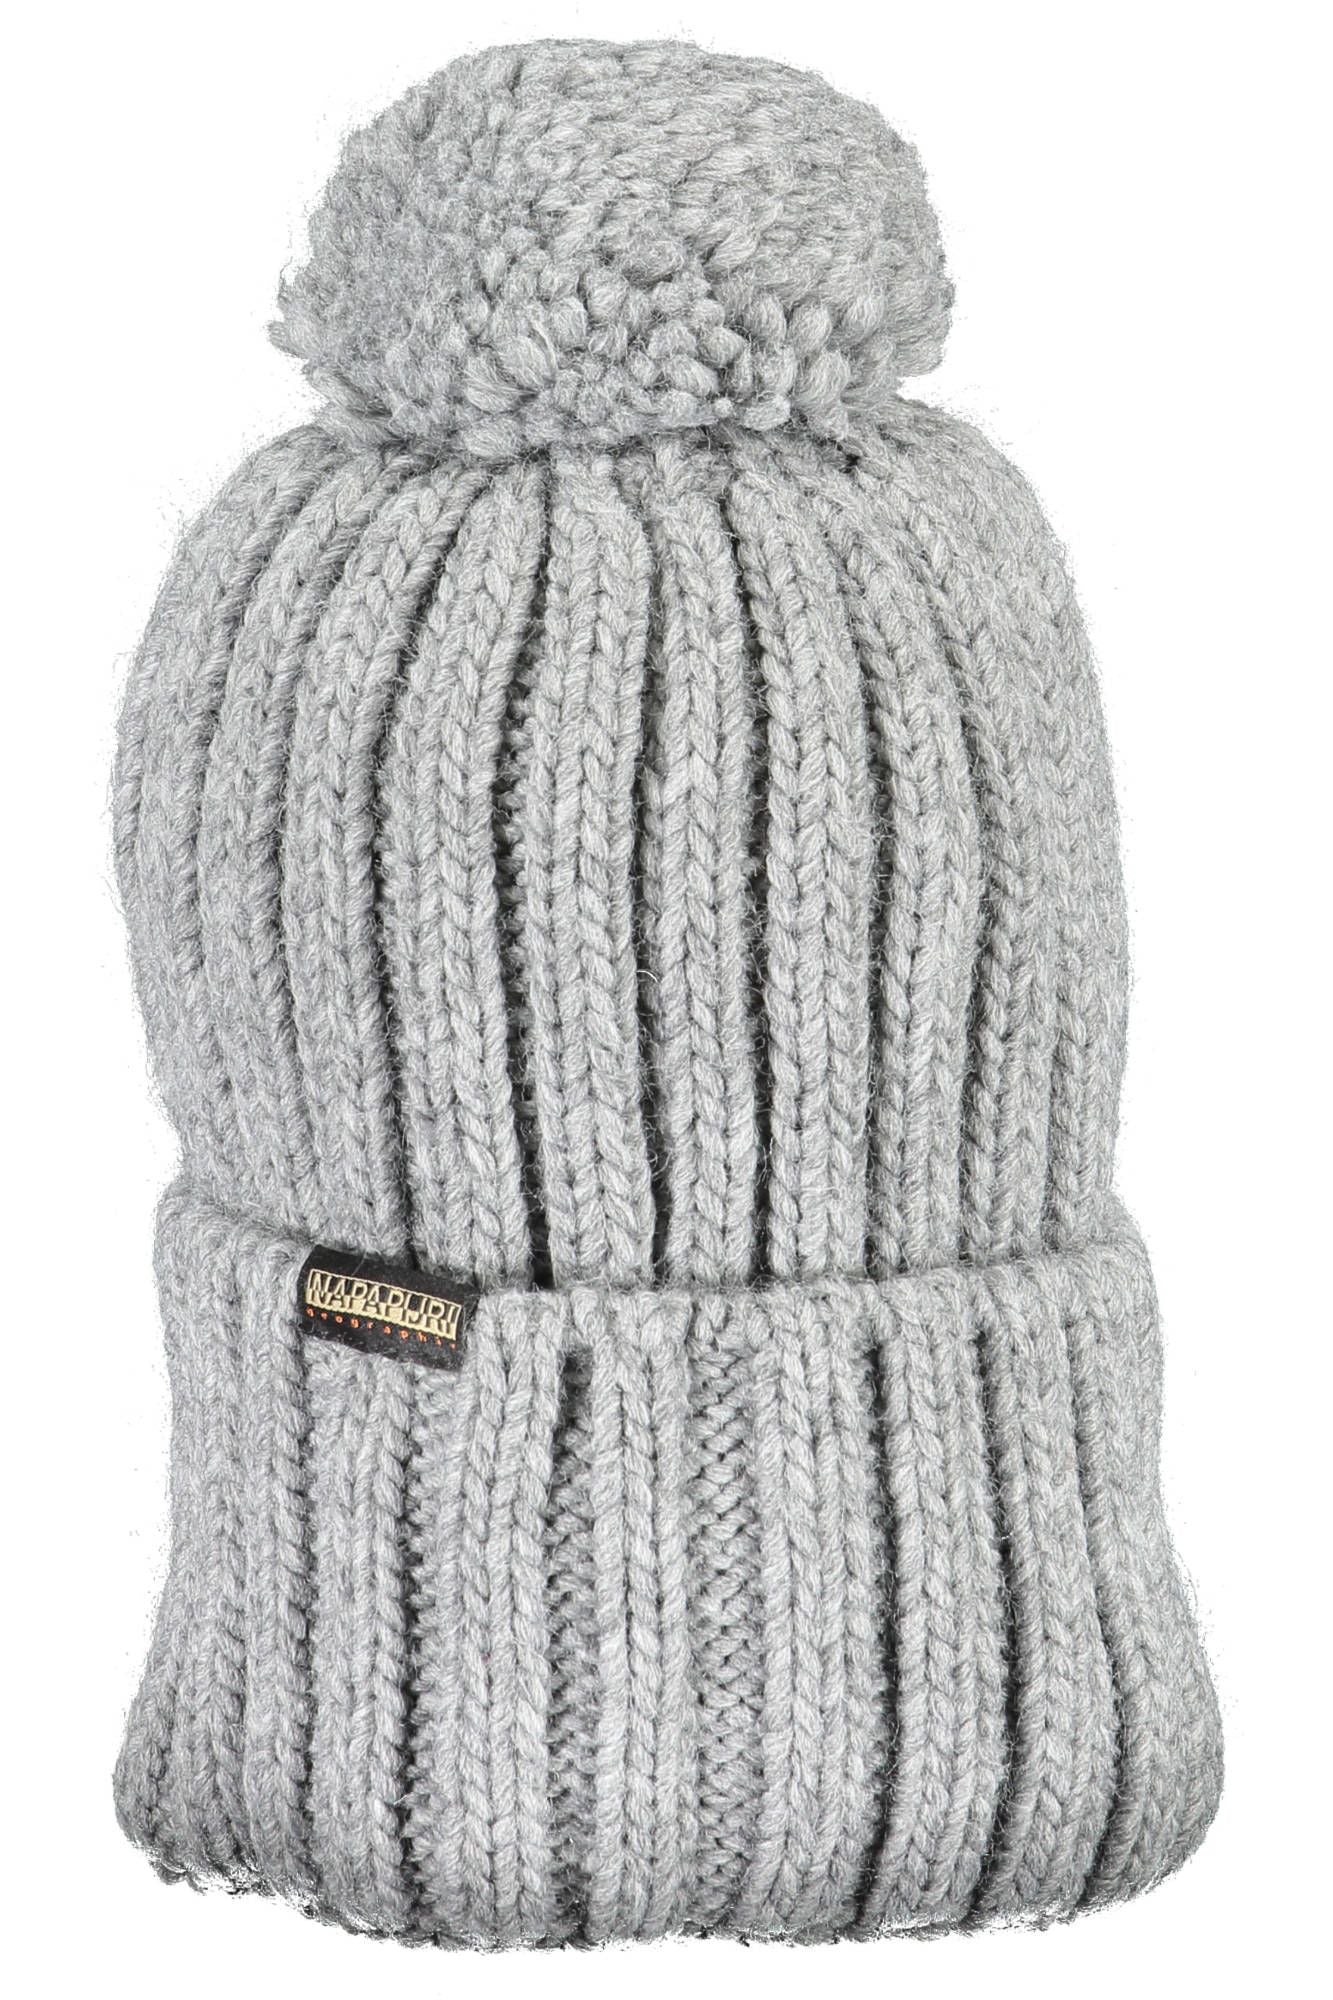 Napapijri Stylish Pompon-Accented Winter Hat